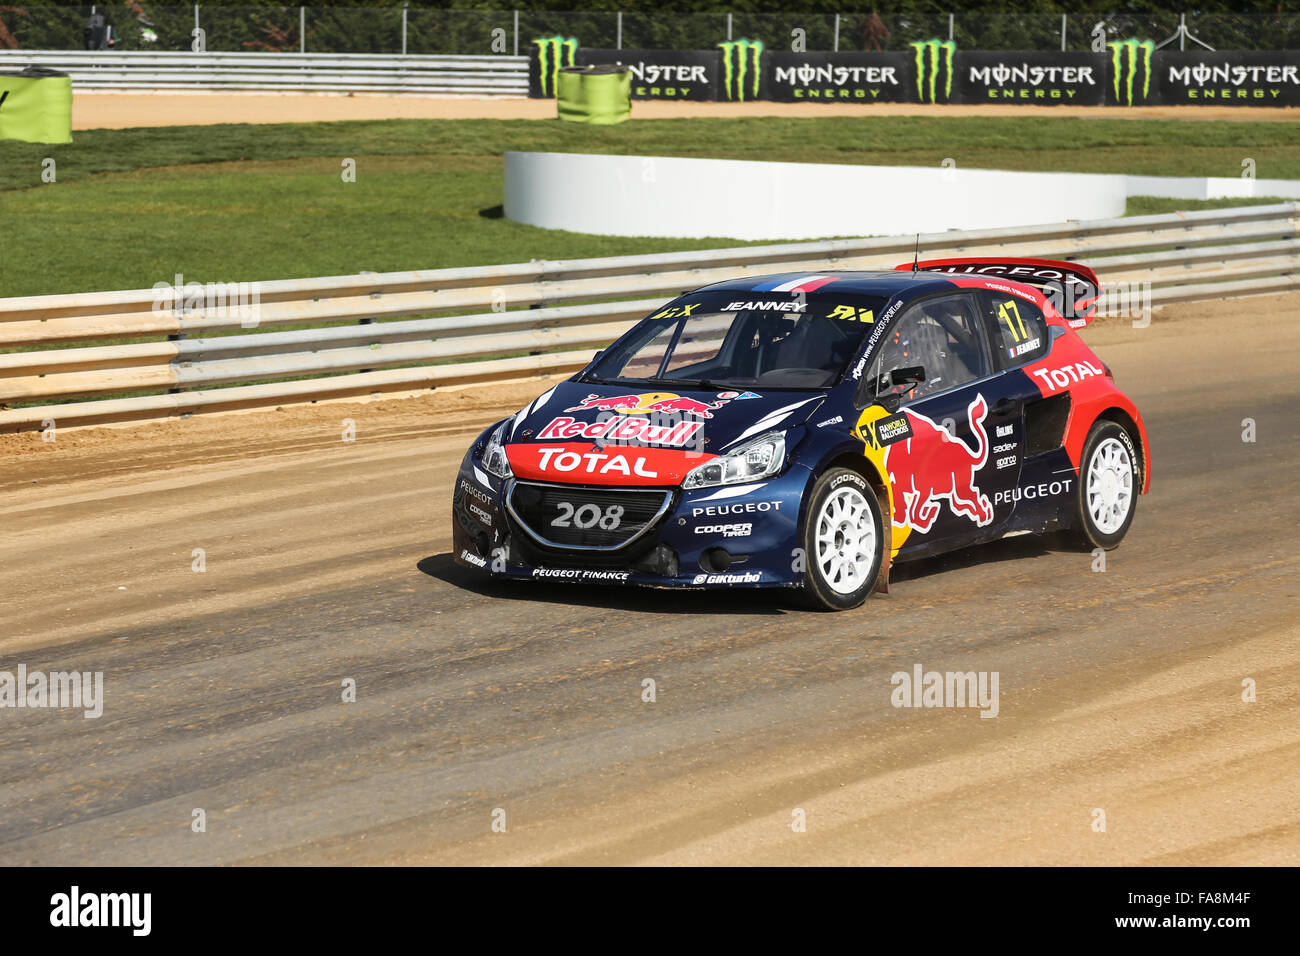 Davy Jeanney drives Peugeot 208 of Team Peugeot Hansen in FIA World  Rallycross Championship Stock Photo - Alamy